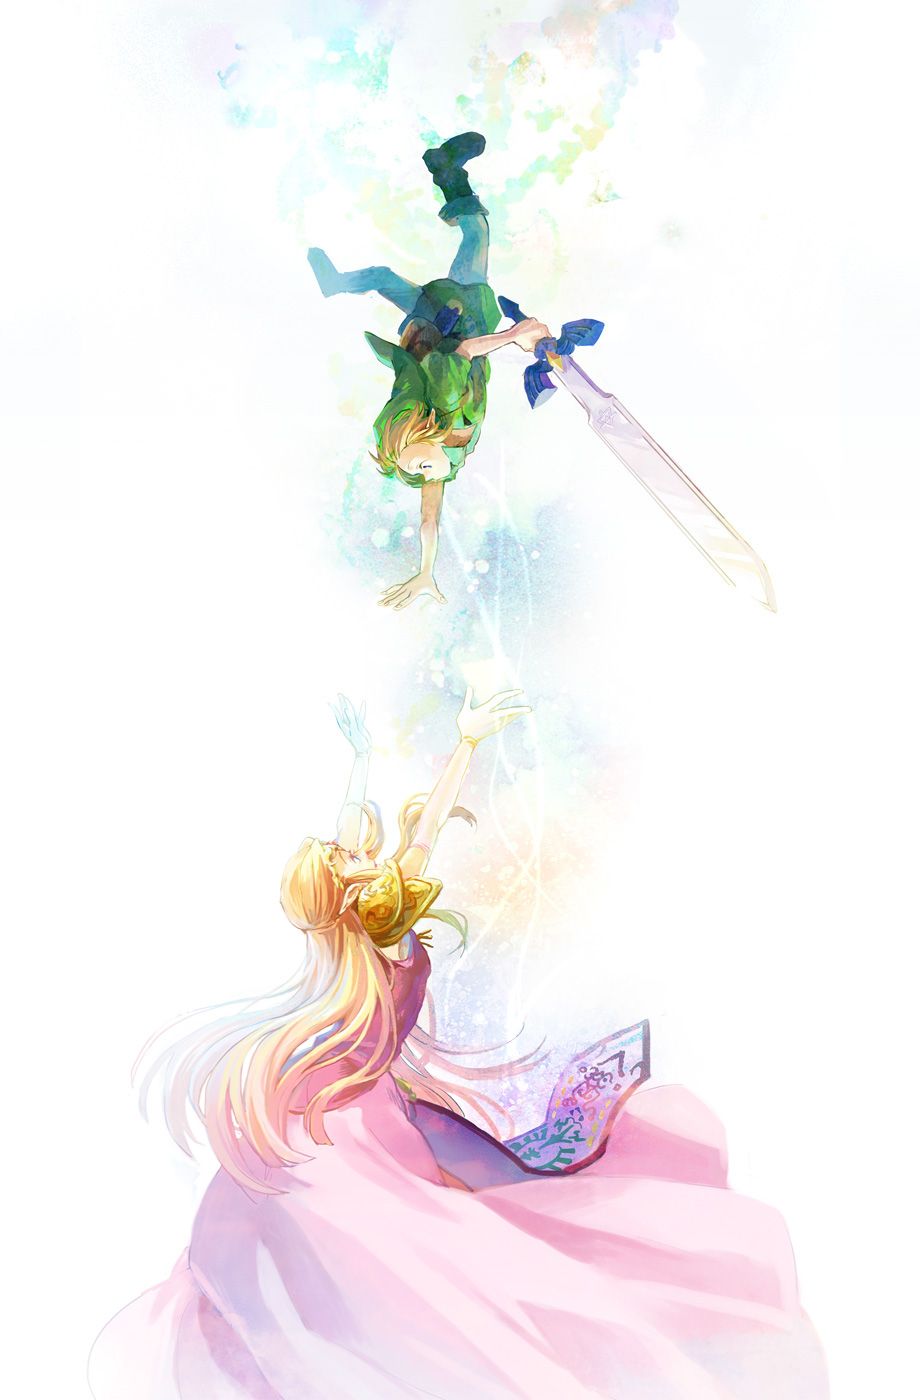 Zelda no Densetsu (The Legend Of Zelda) Anime Image Board